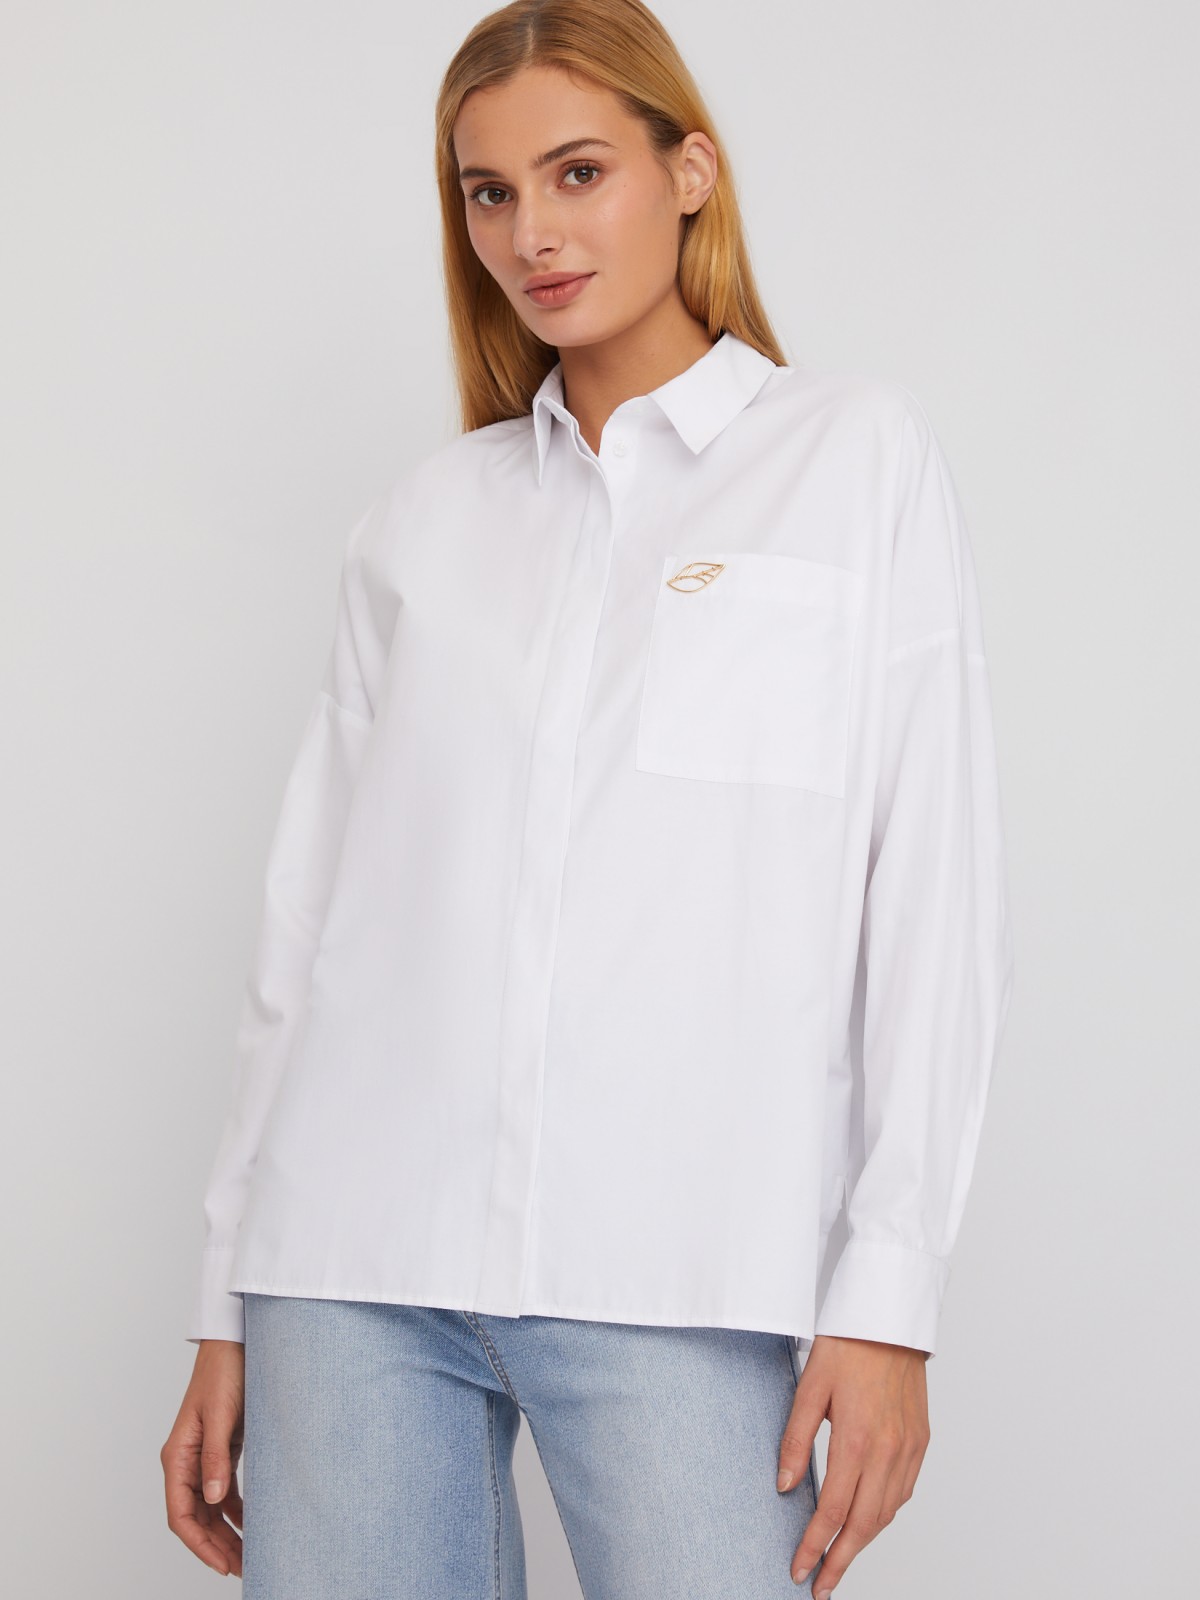 Рубашка оверсайз силуэта с металлическим значком-нашивкой zolla 02411117Y052, цвет белый, размер XXS - фото 4